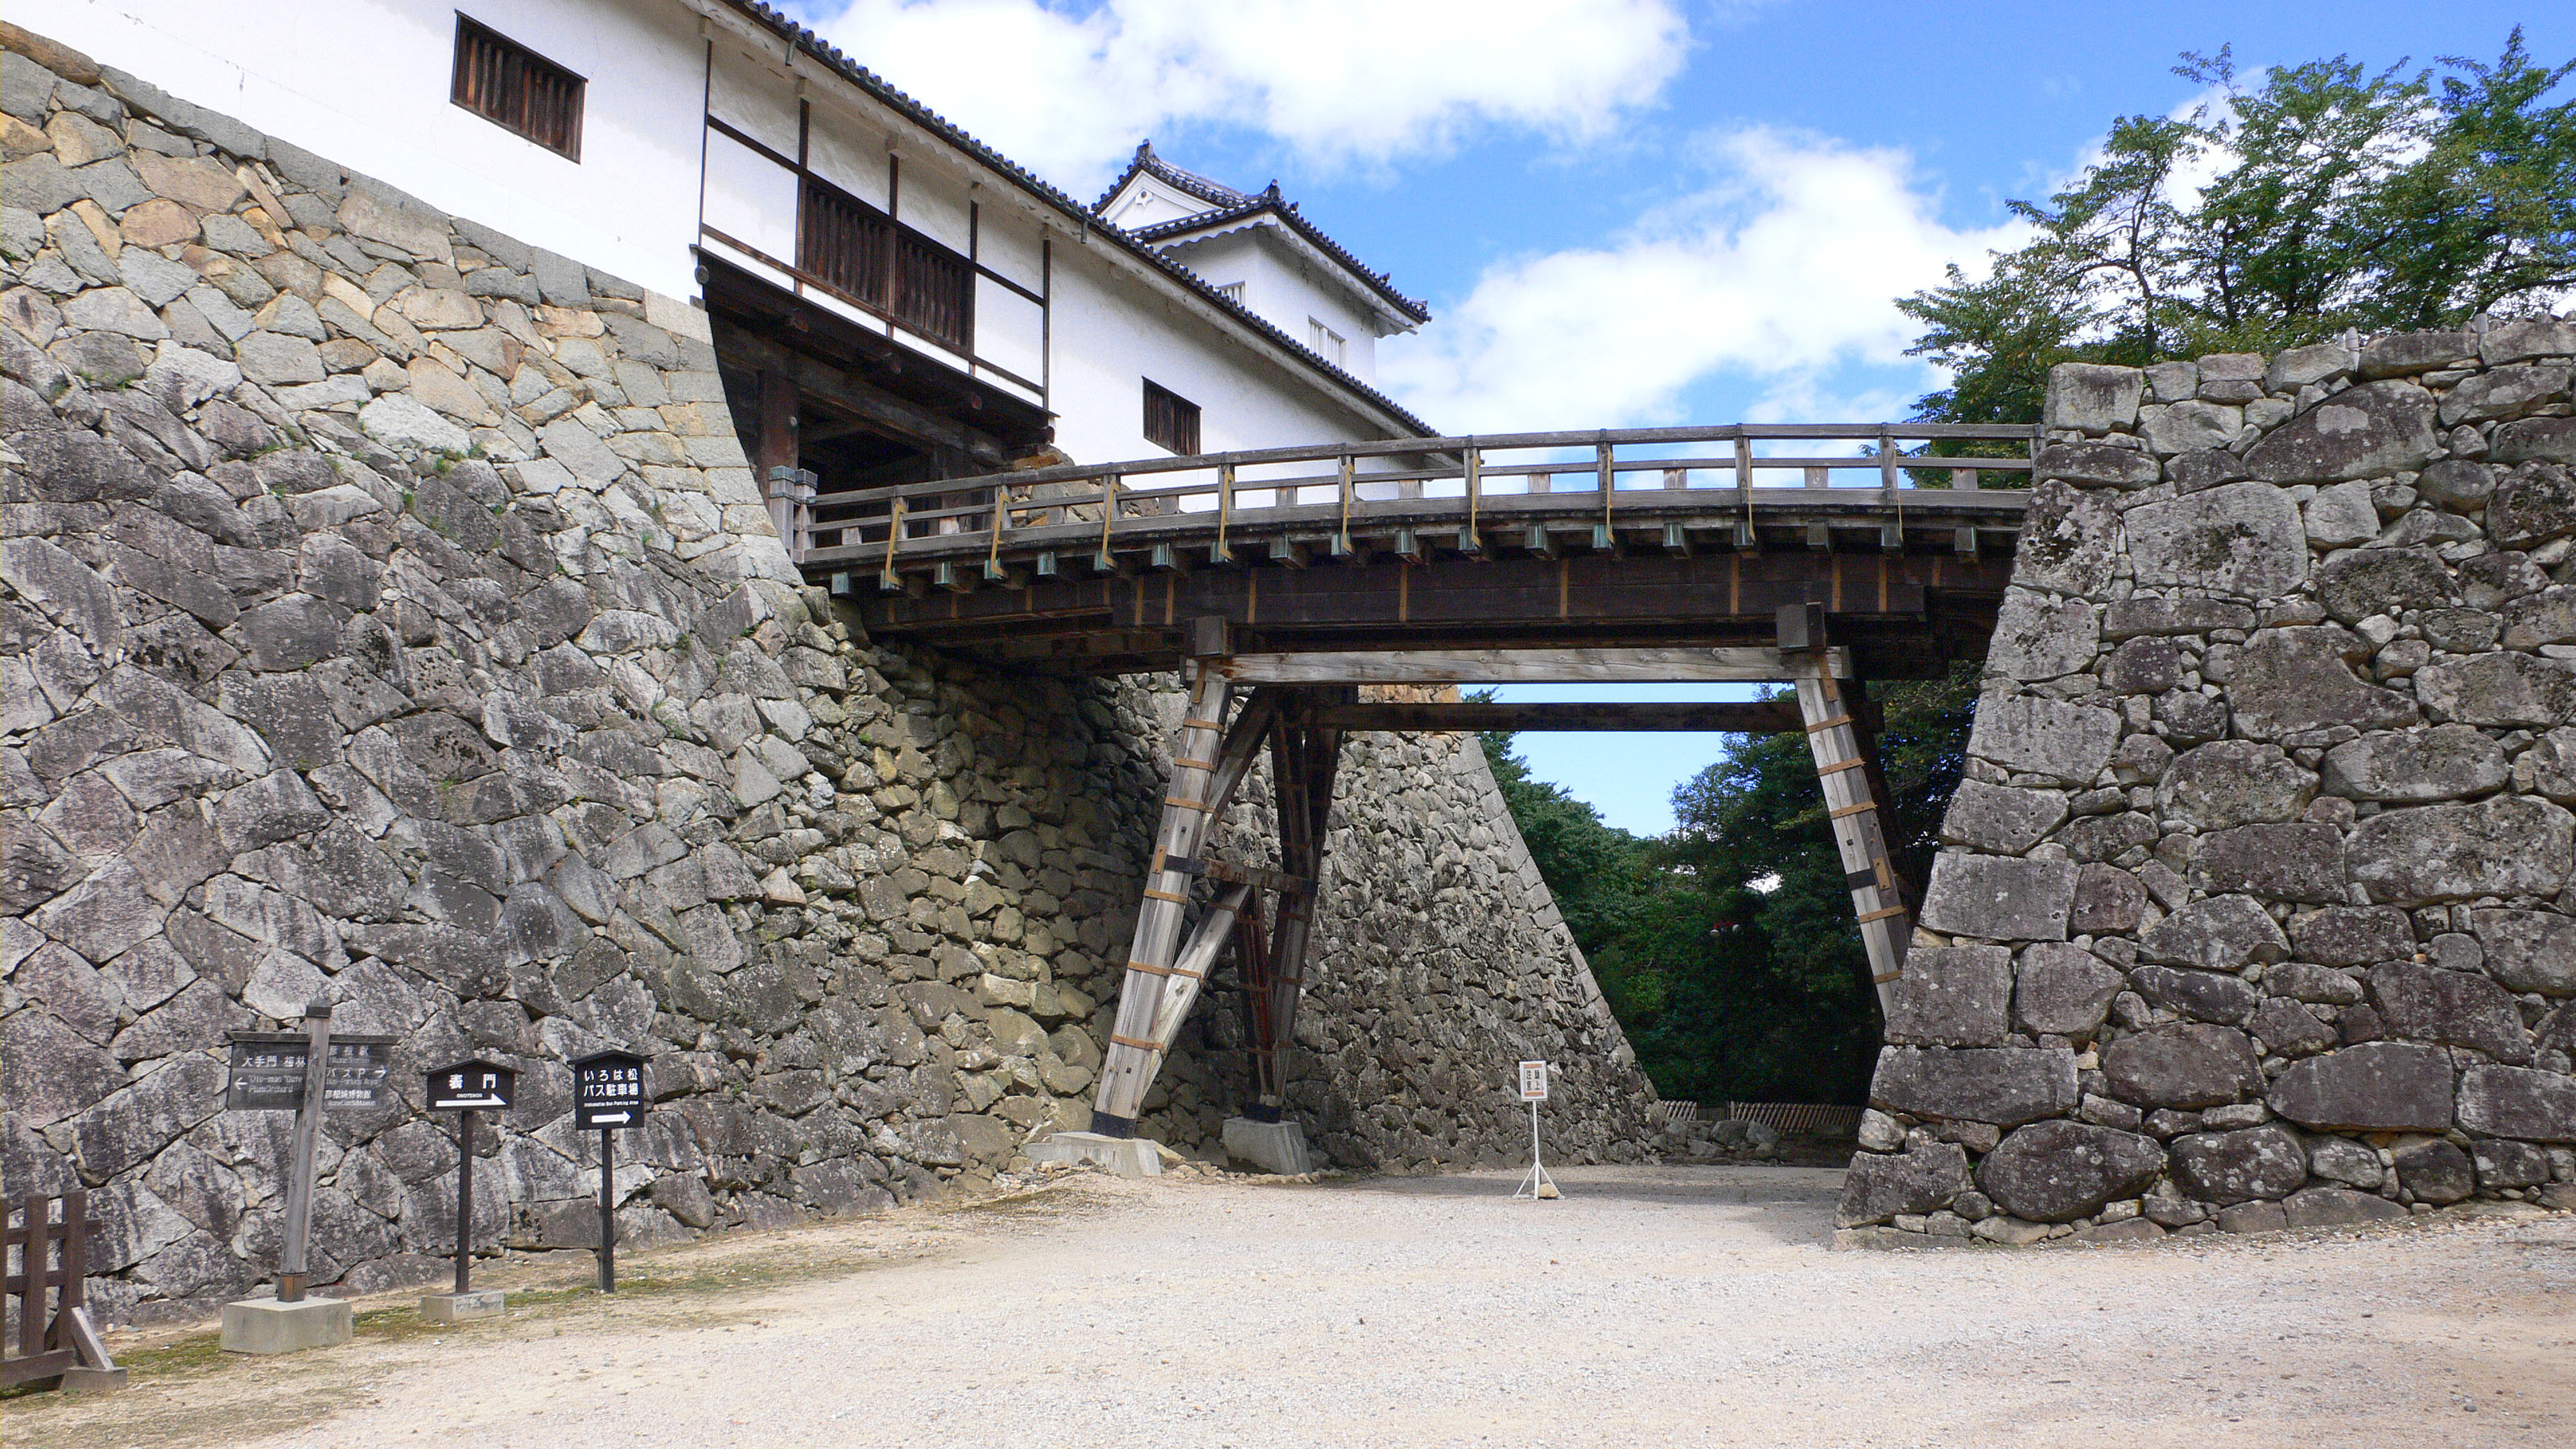 Hikone Castle Backgrounds on Wallpapers Vista